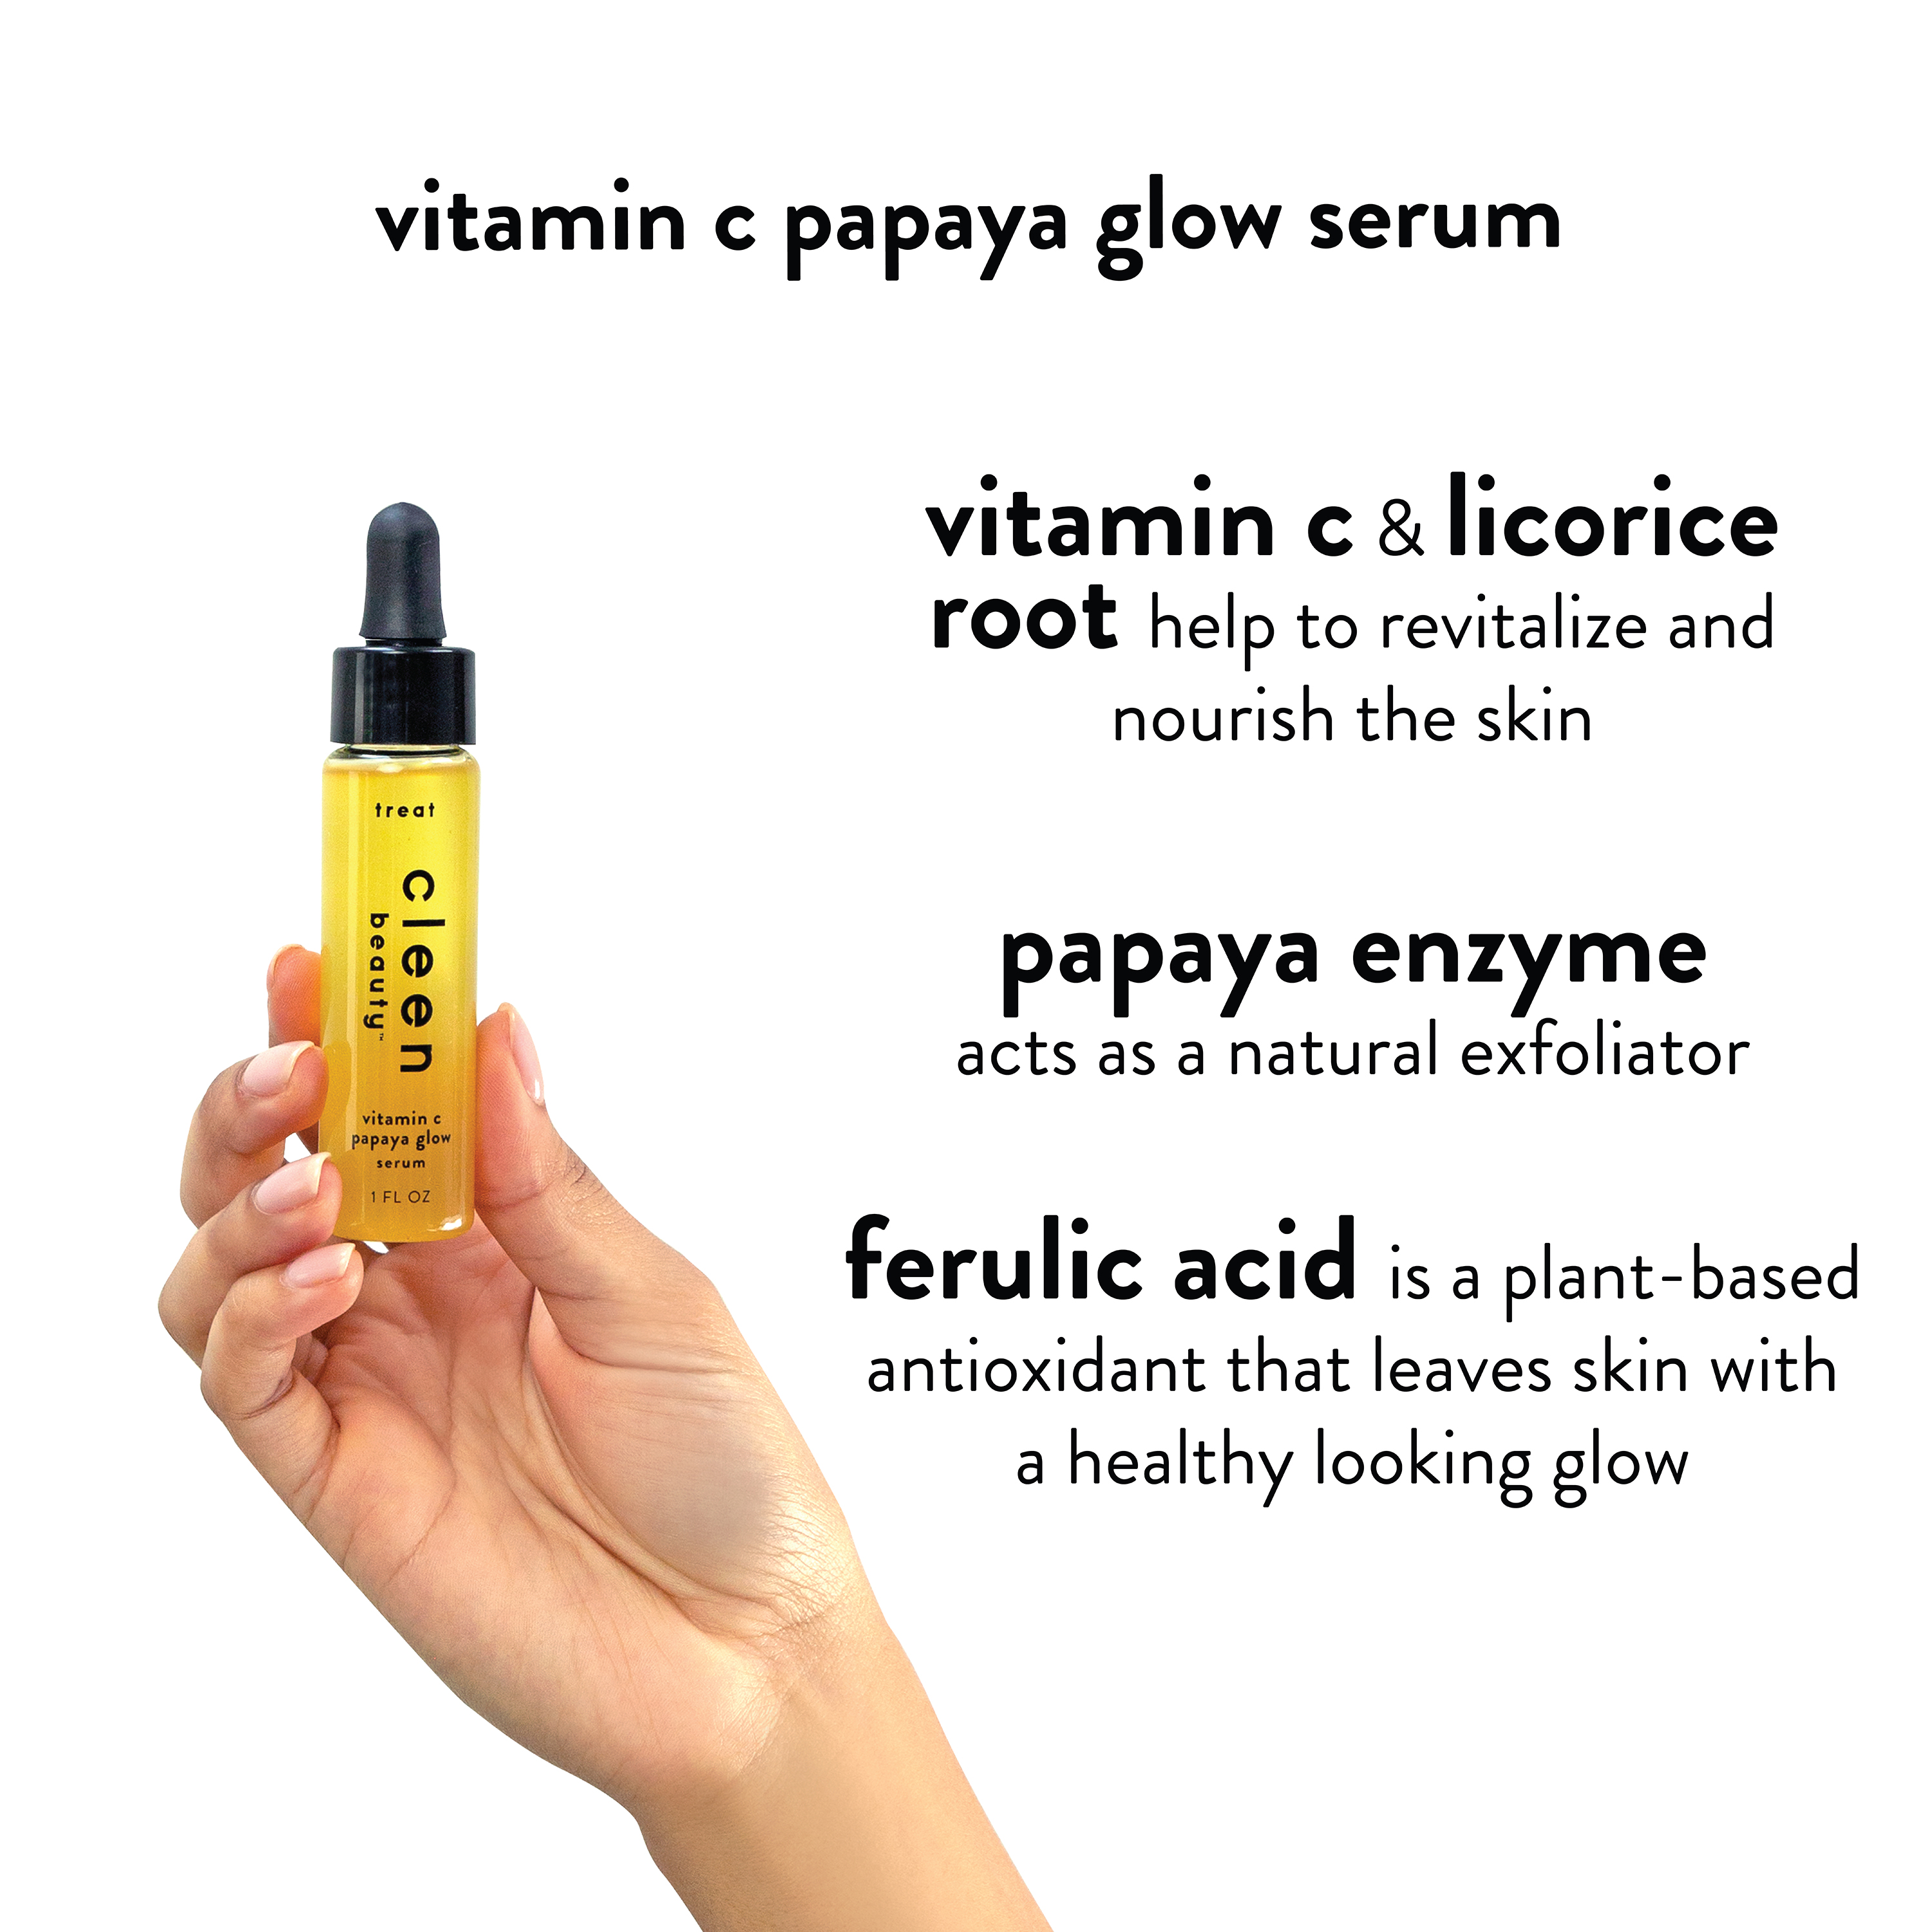 cleen beauty Vitamin C Papaya Glow Serum, 1 fl oz - image 2 of 10